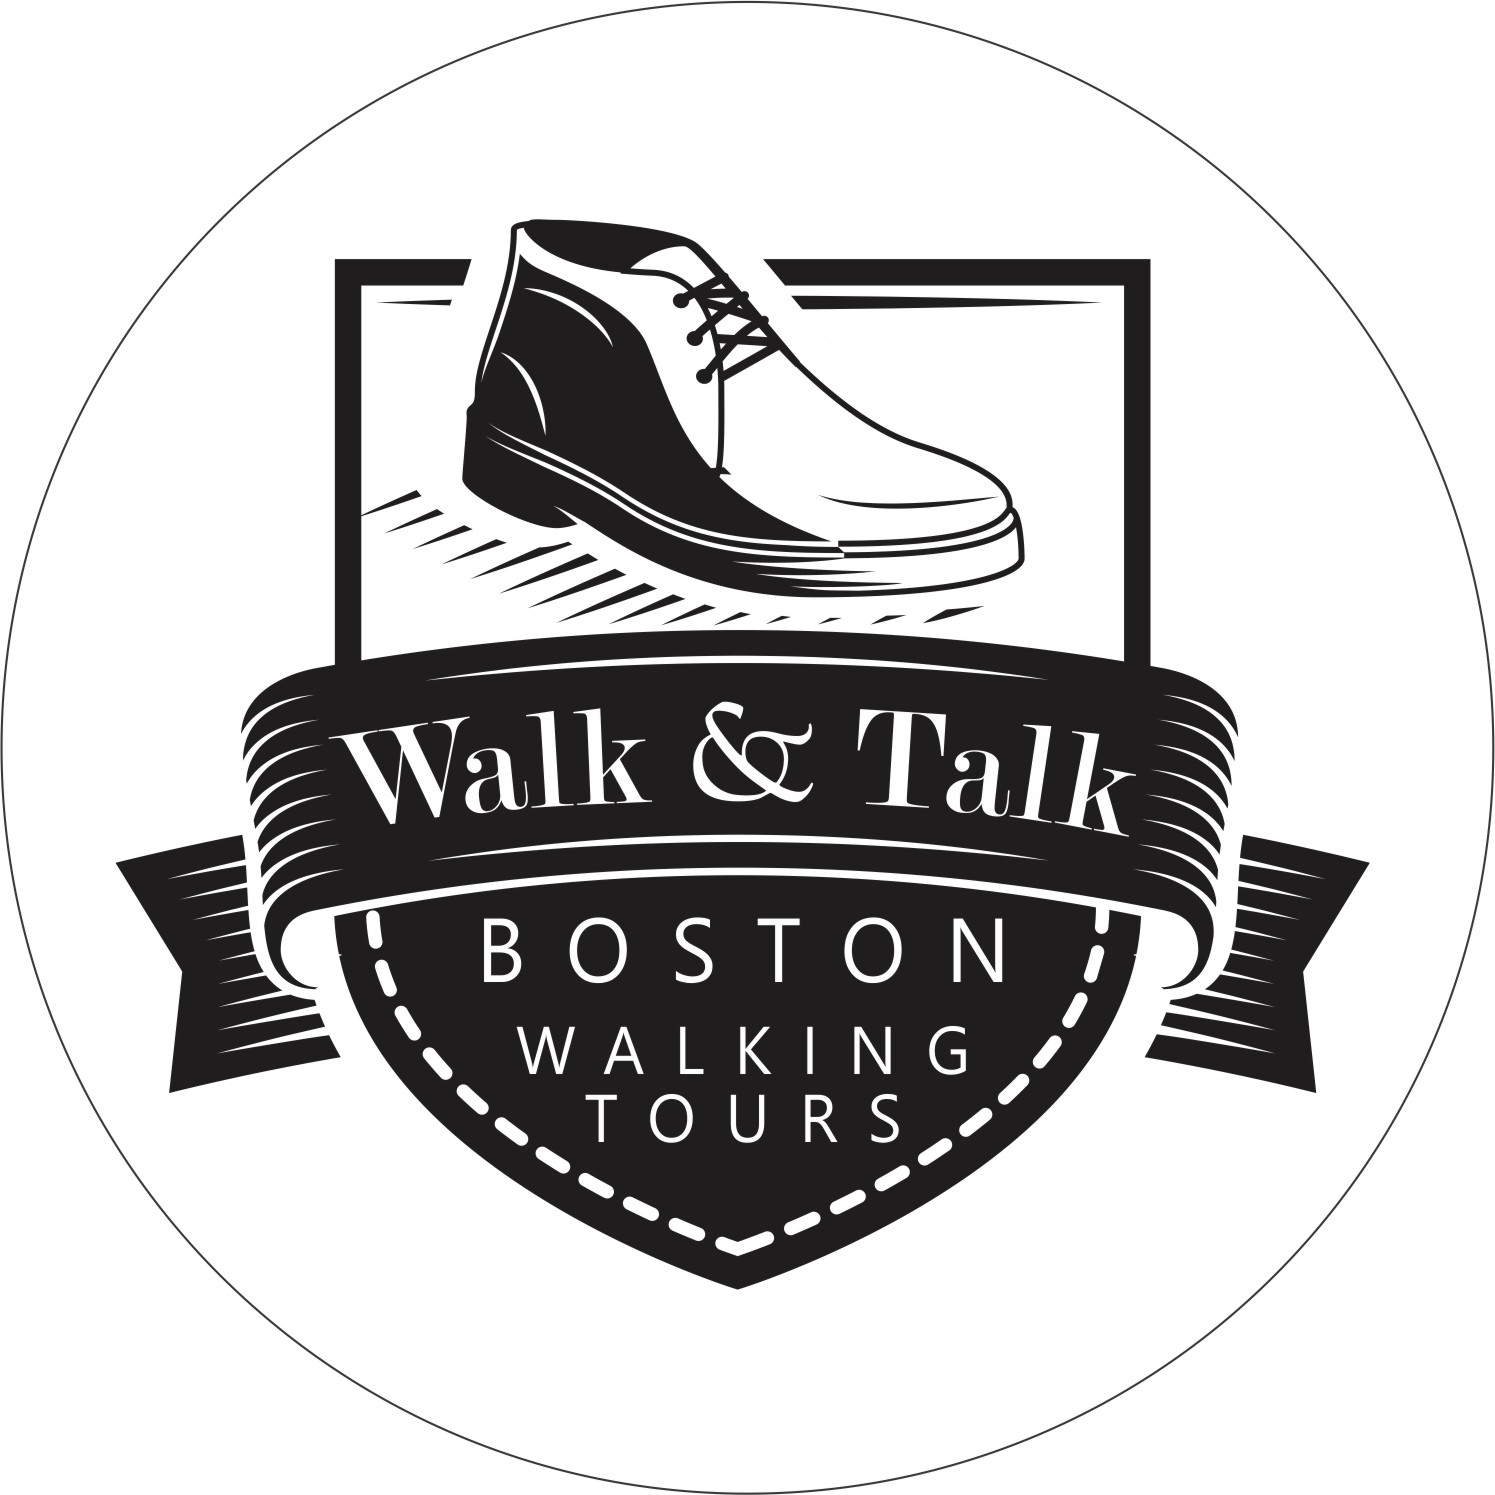 Walk & Talk Boston Walking Tours